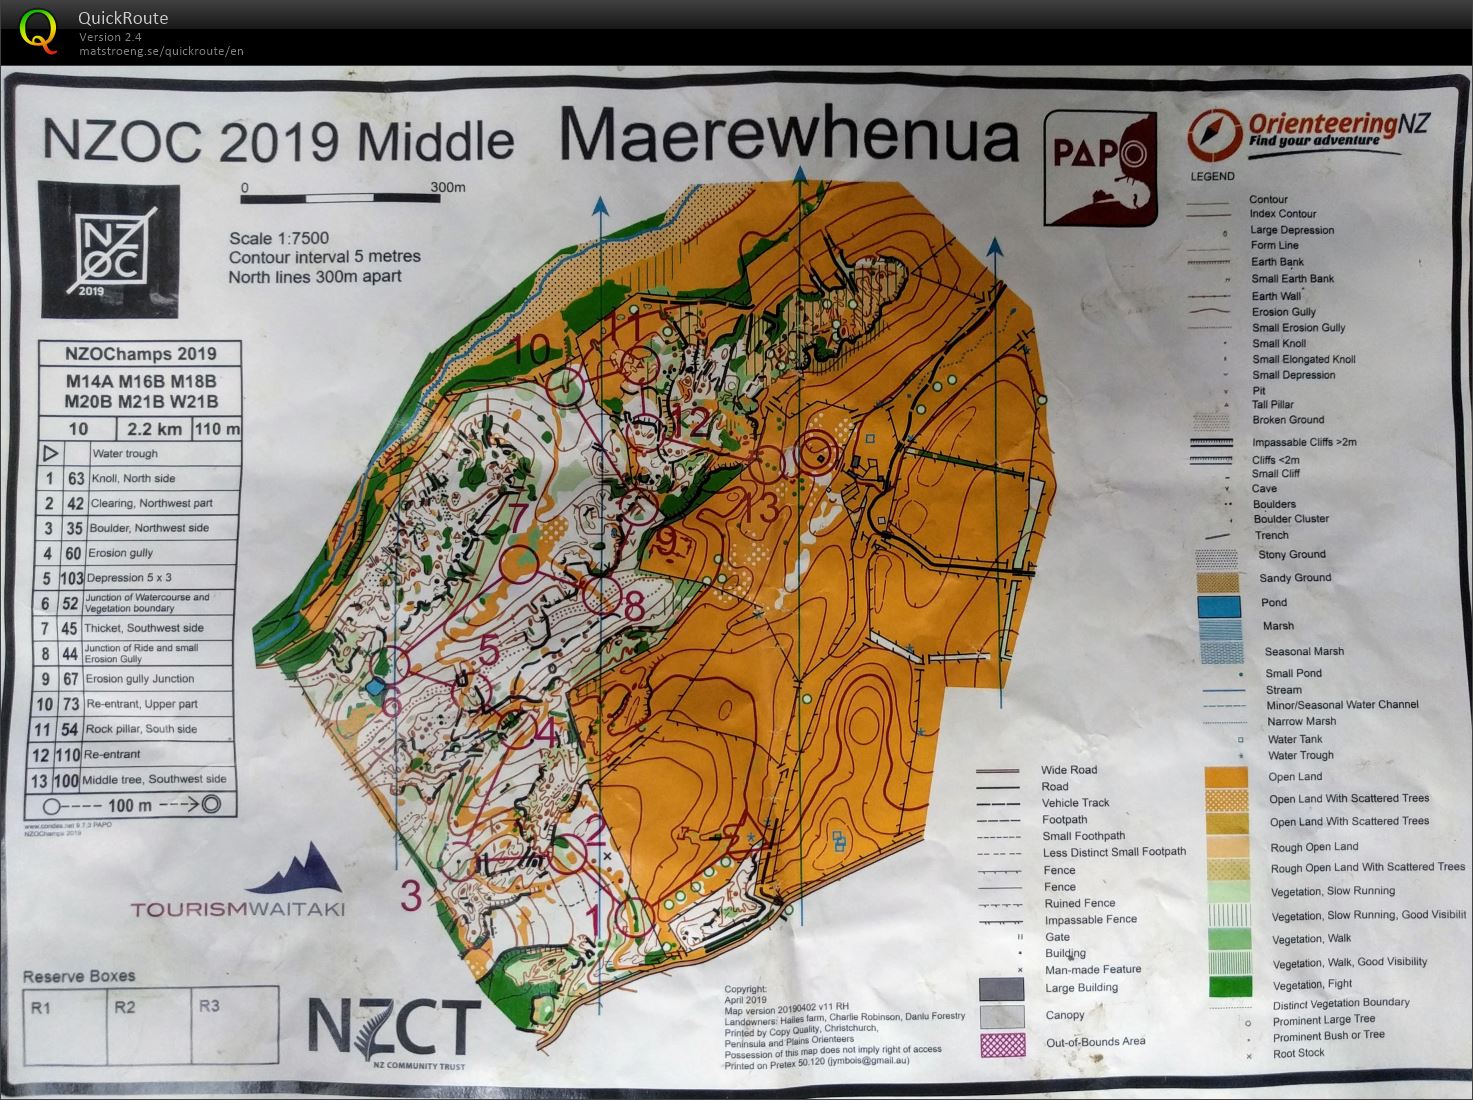 NZOC 2019 Middle Maerewhenua - W21B (21-04-2019)